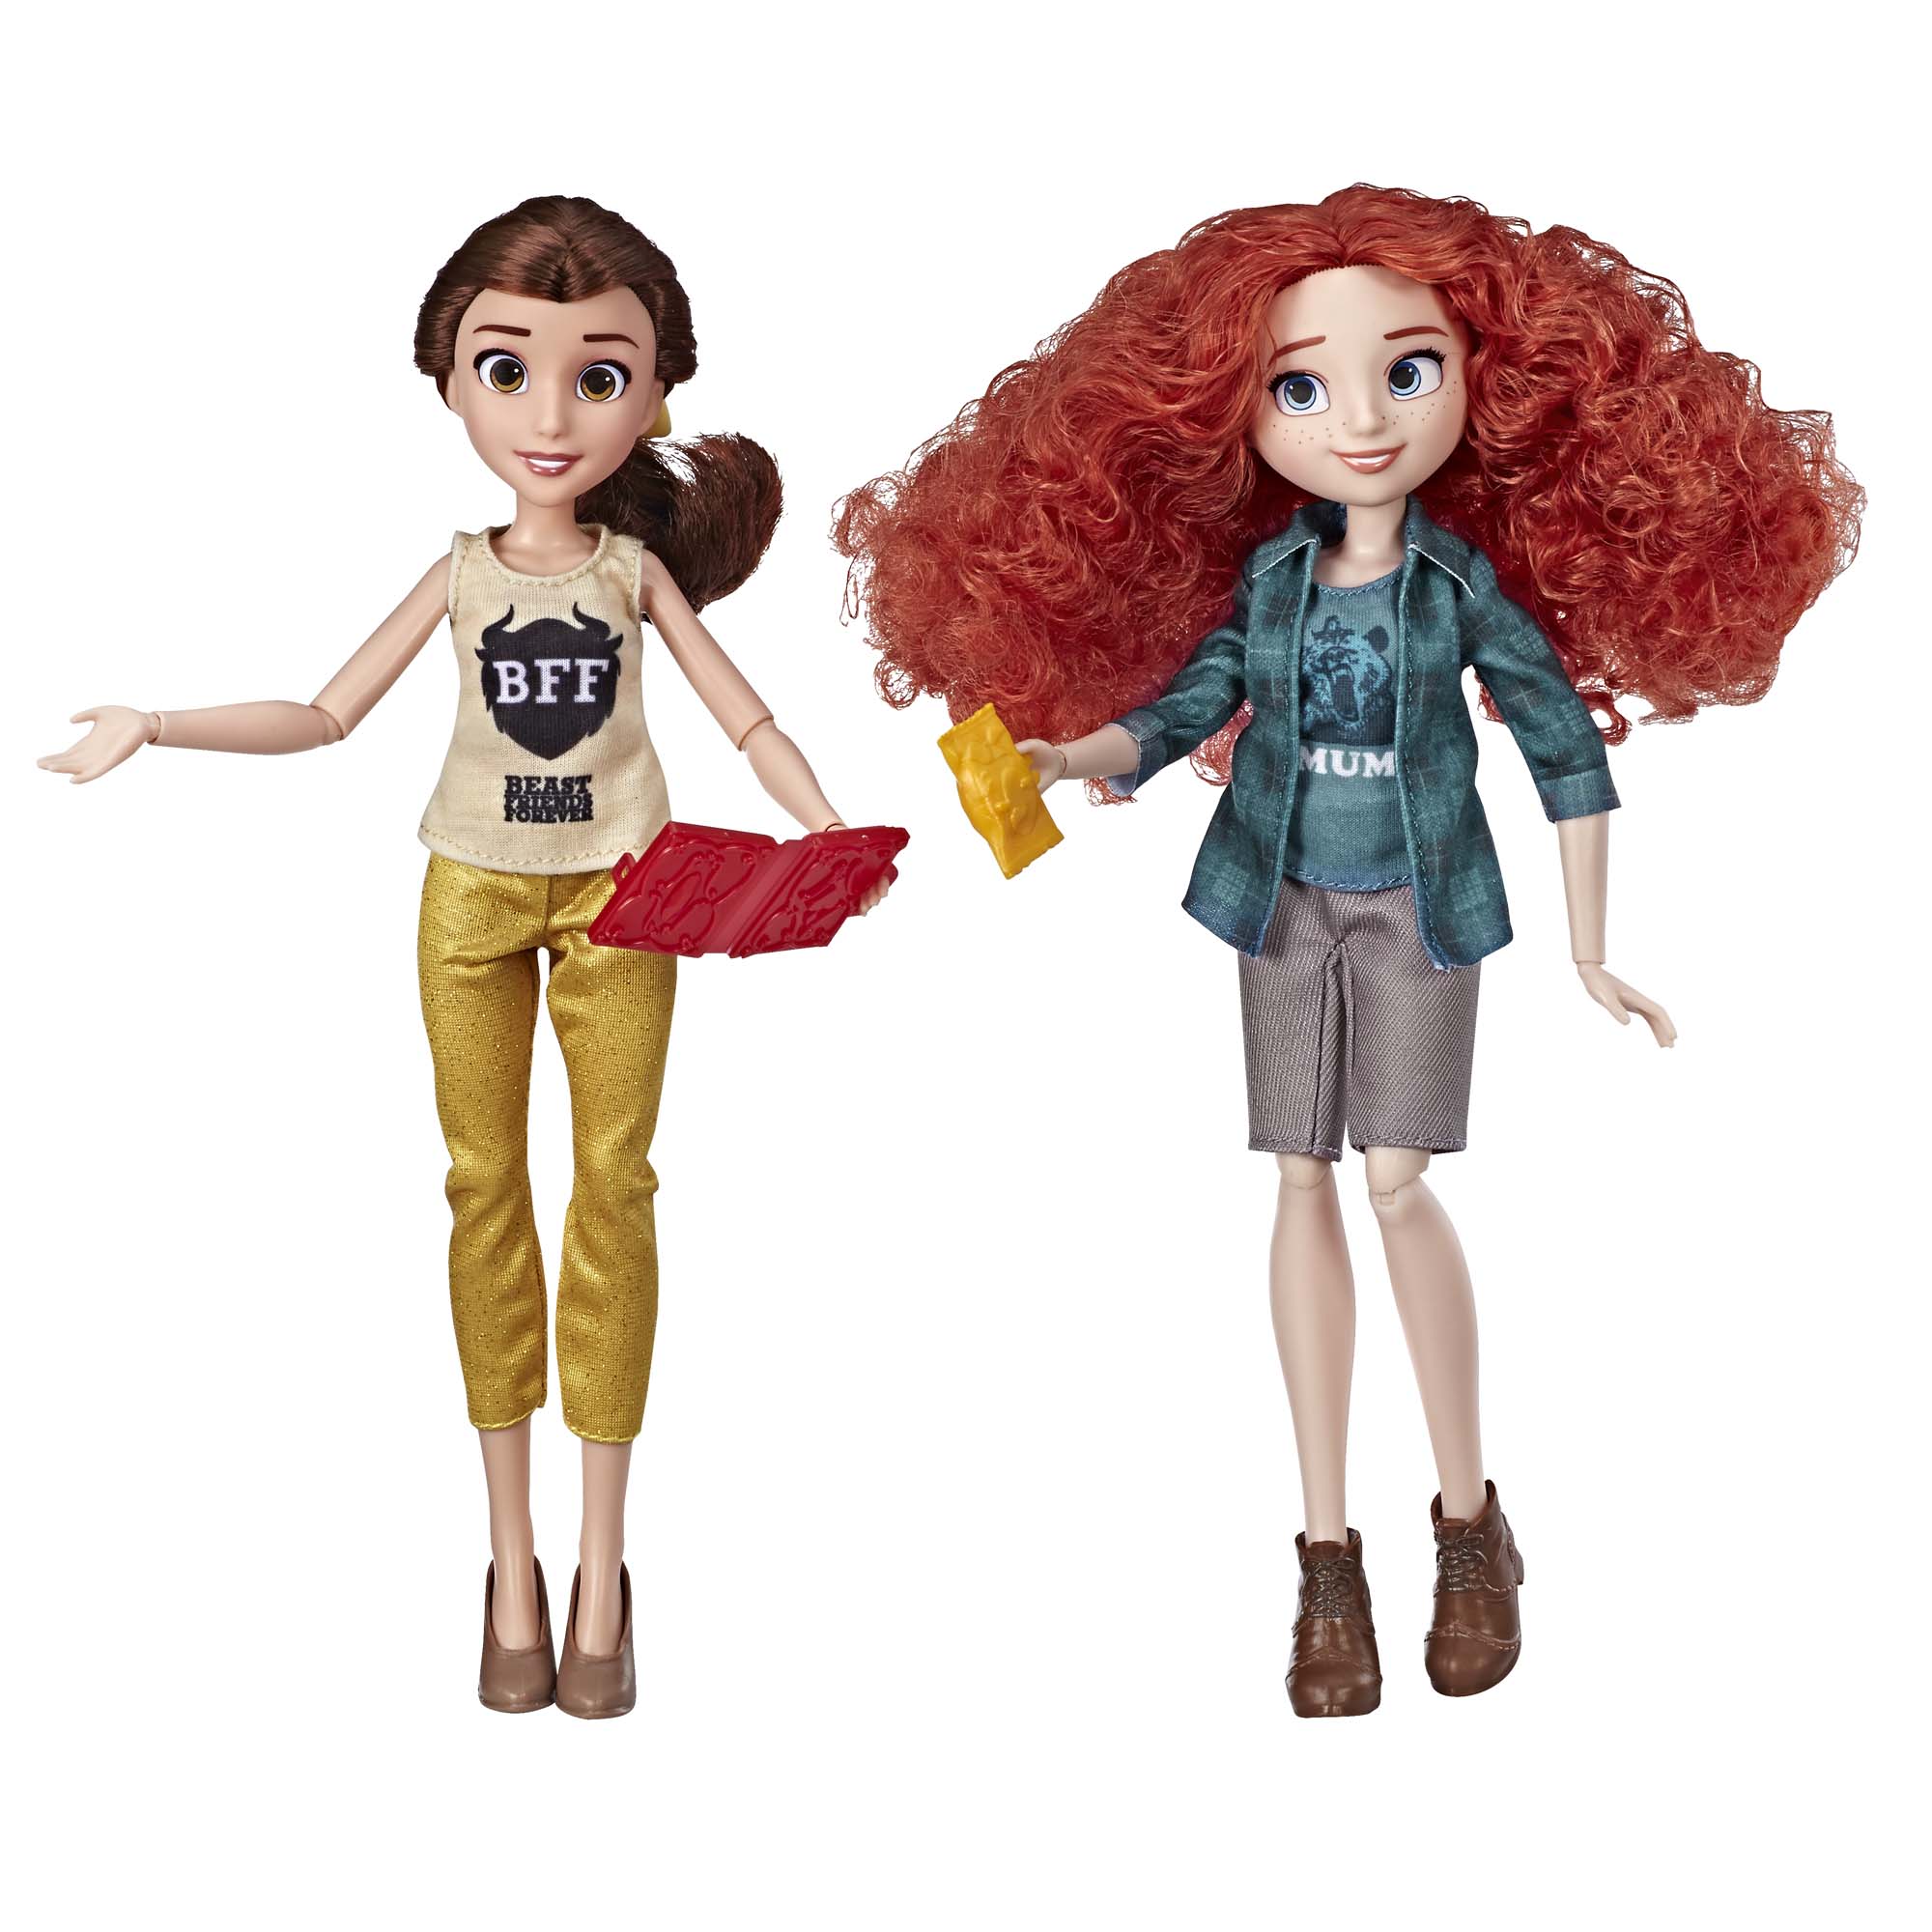 Disney Princess Ralph Breaks the Internet Movie Dolls Belle and Merida - image 1 of 2